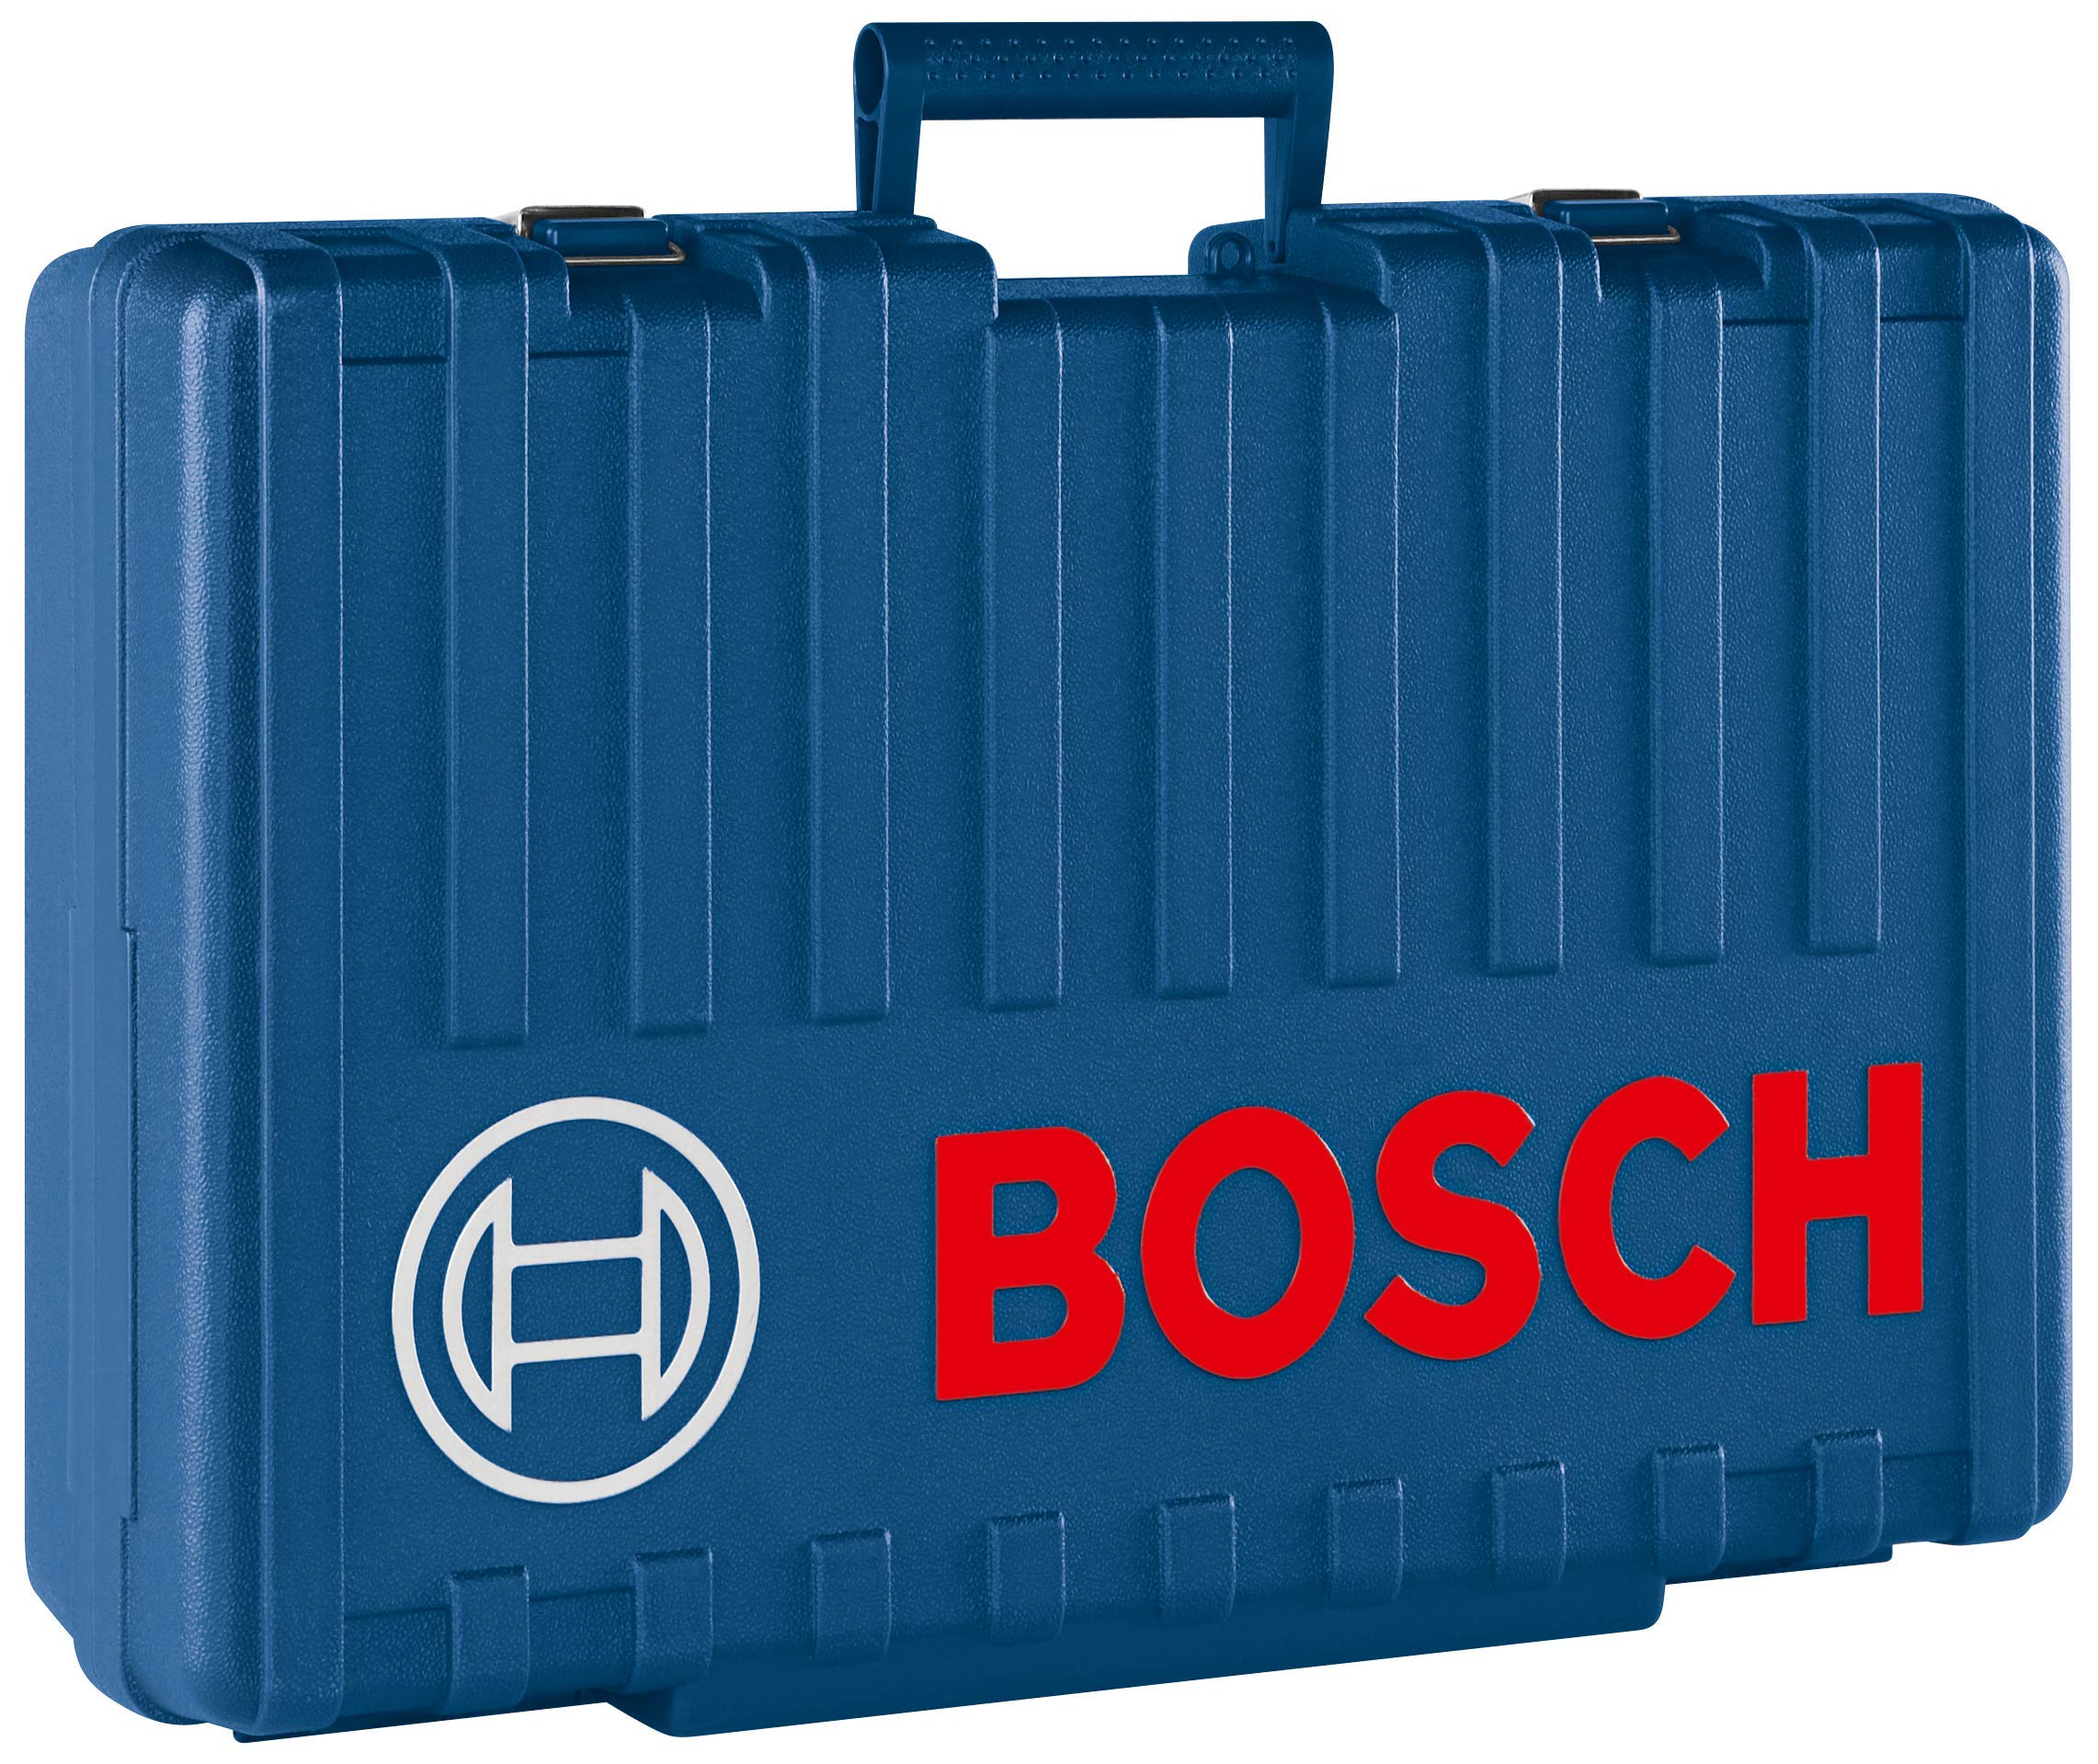 BOSCH 1-9/16-Inch SDS-Max Combination Rotary Hammer RH540M, Blue